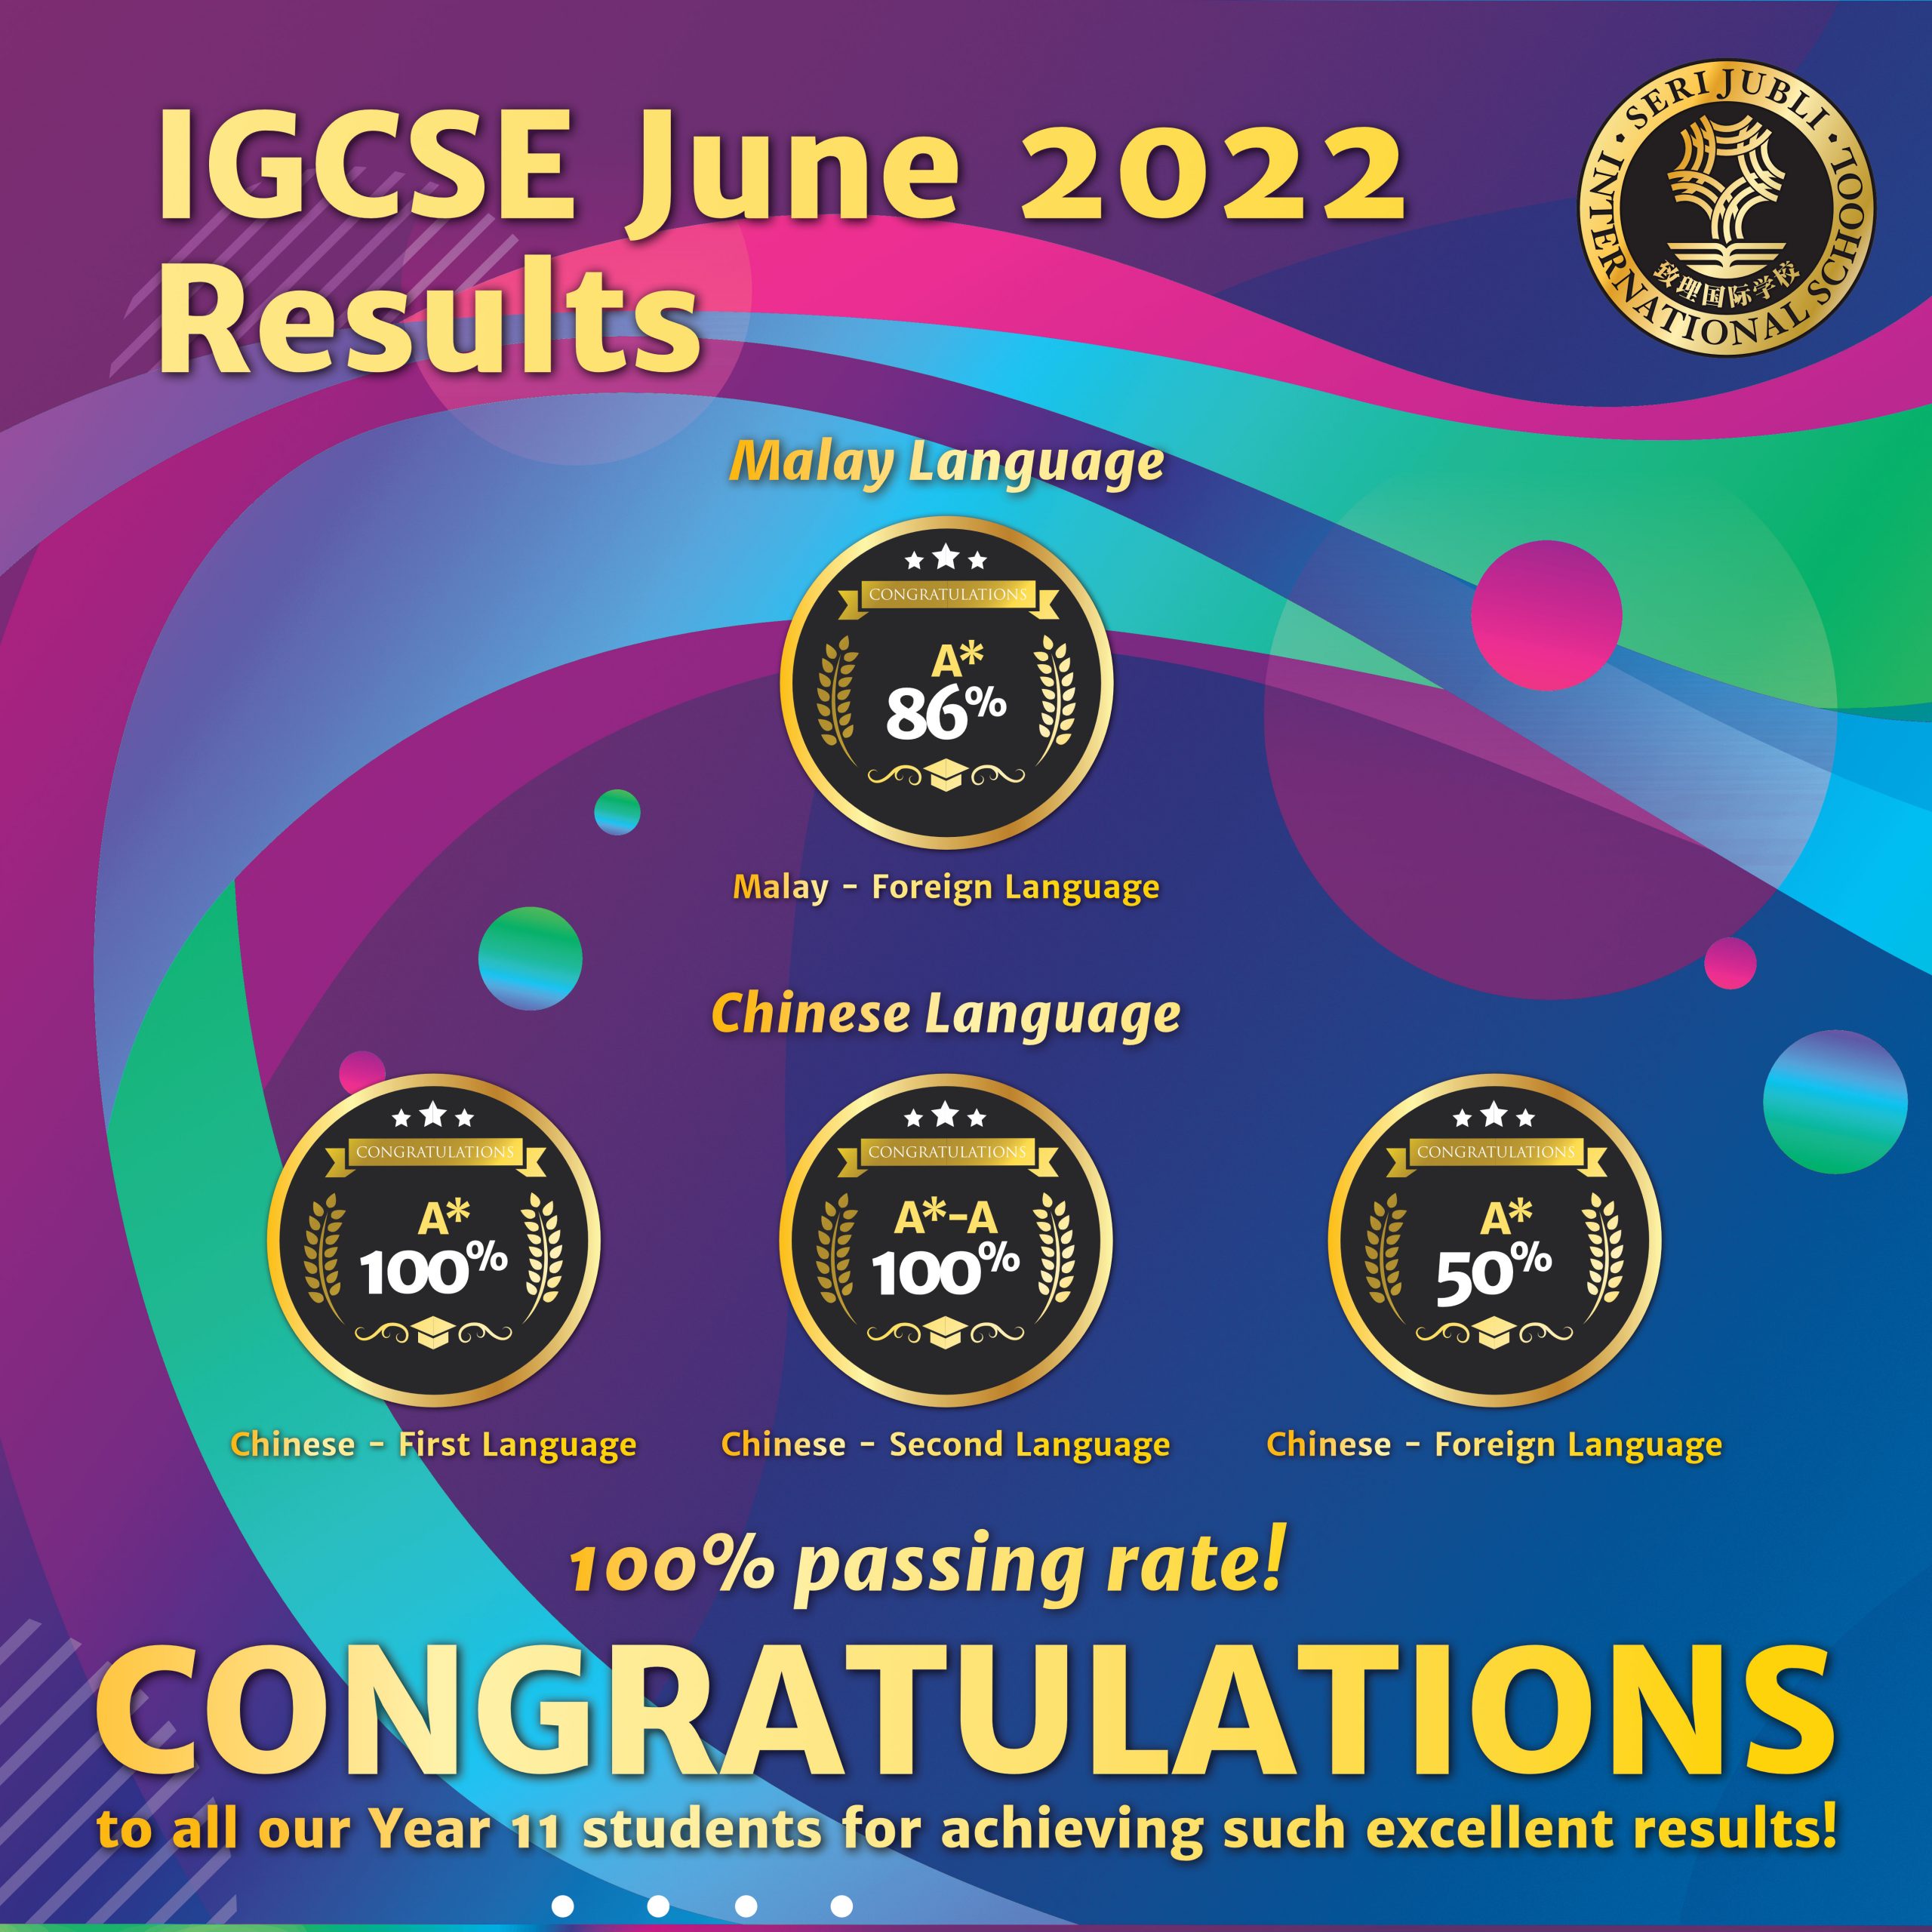 IGCSE June 2022 Results - Square